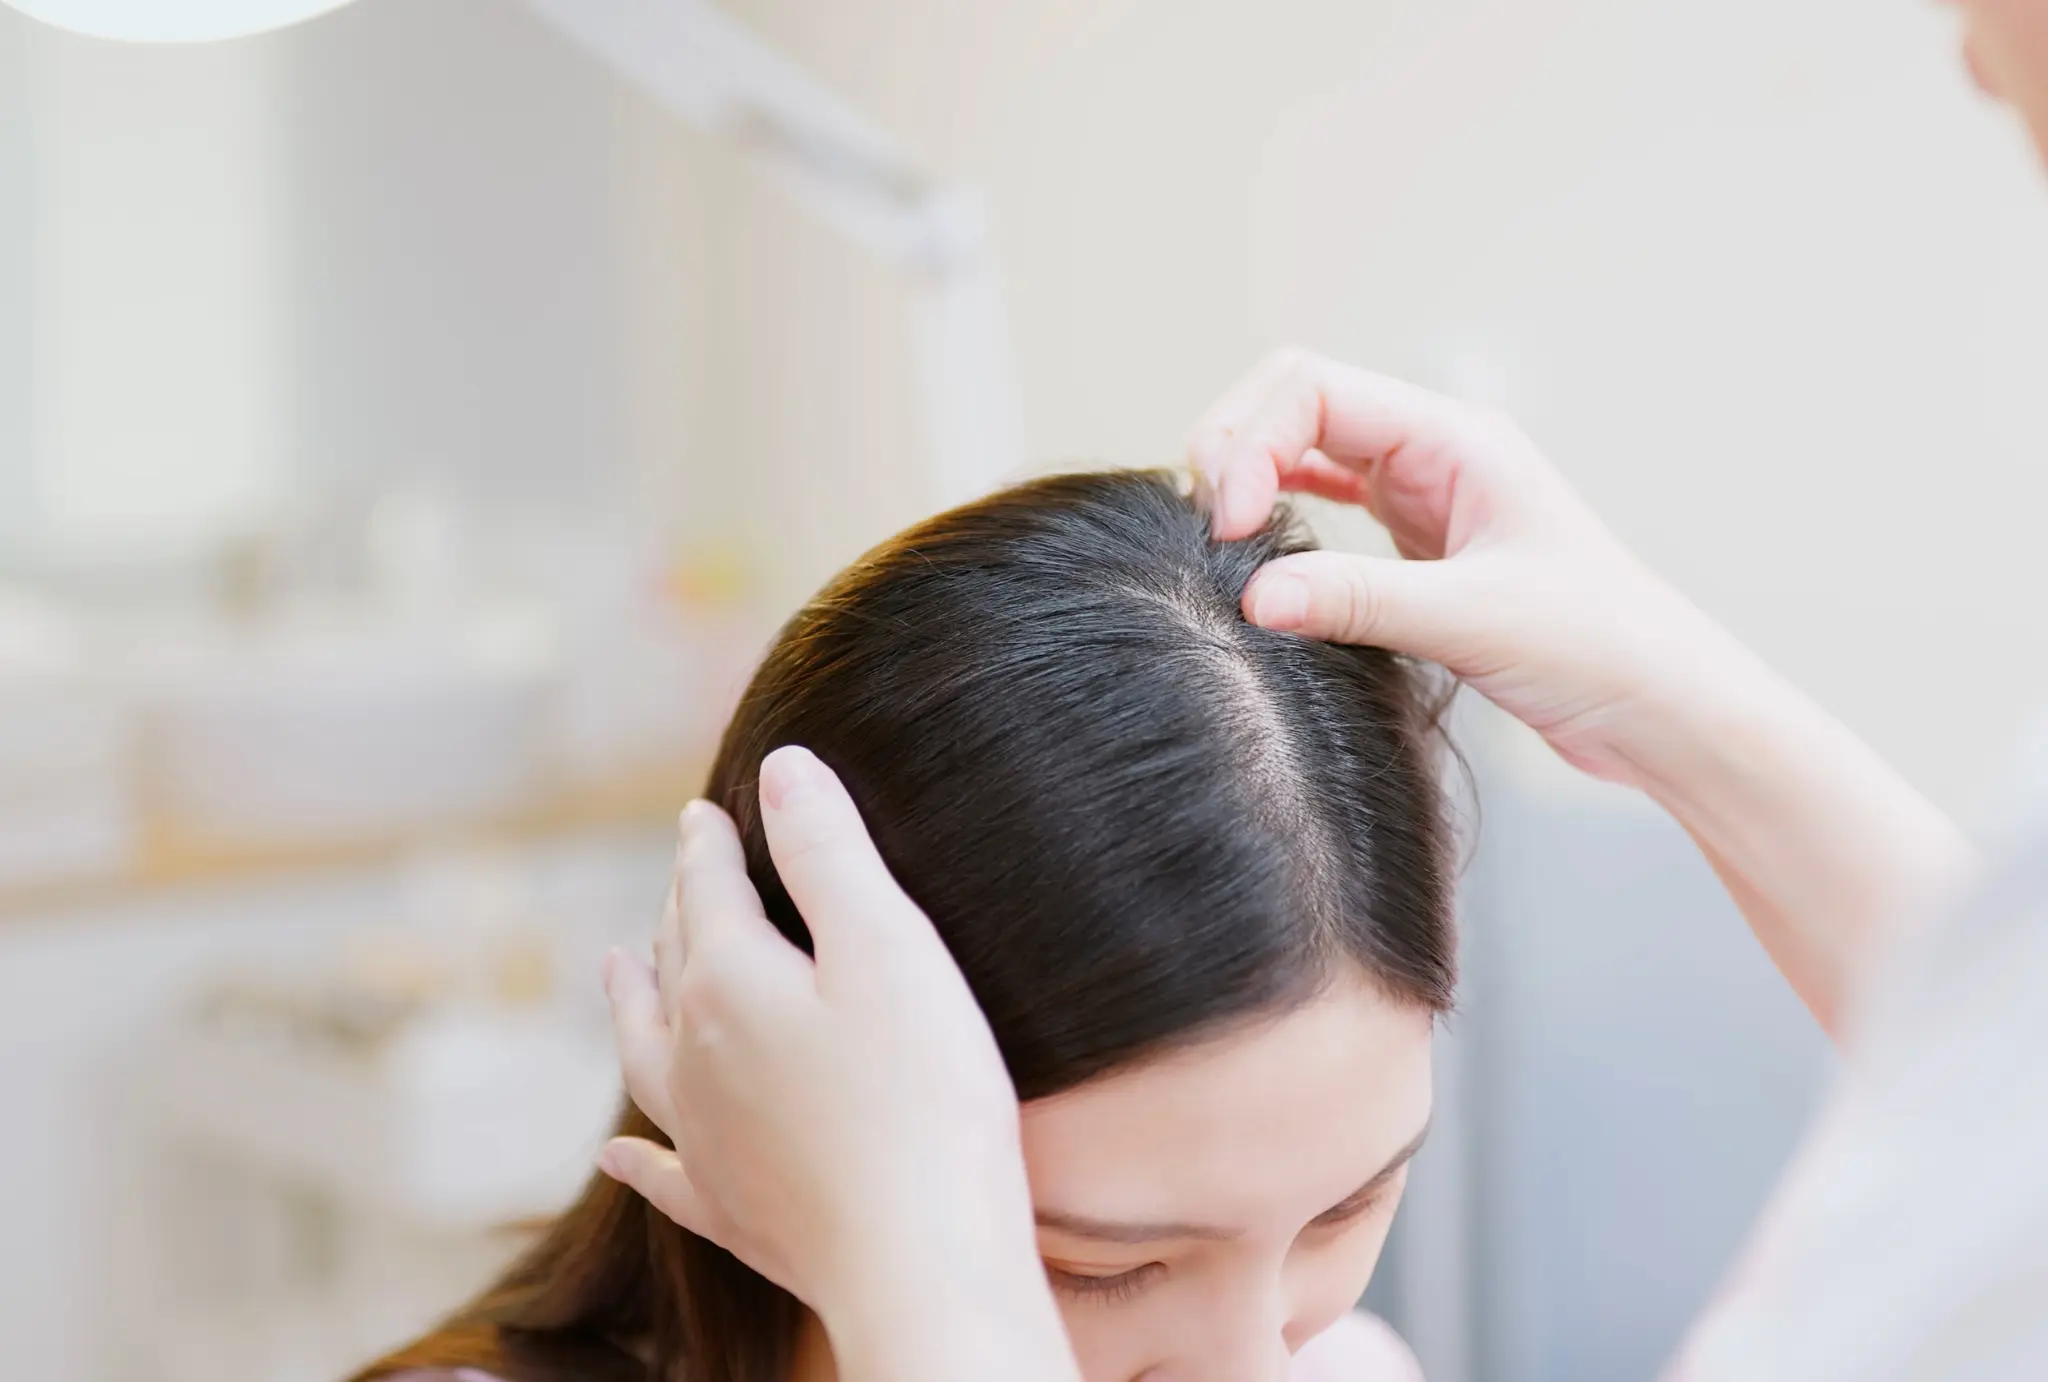 Rahasia Tersembunyi! Inilah Cara Ampuh Menjaga Kesehatan Kulit Kepala dan Rambut yang Mesti Anda Ketahui!